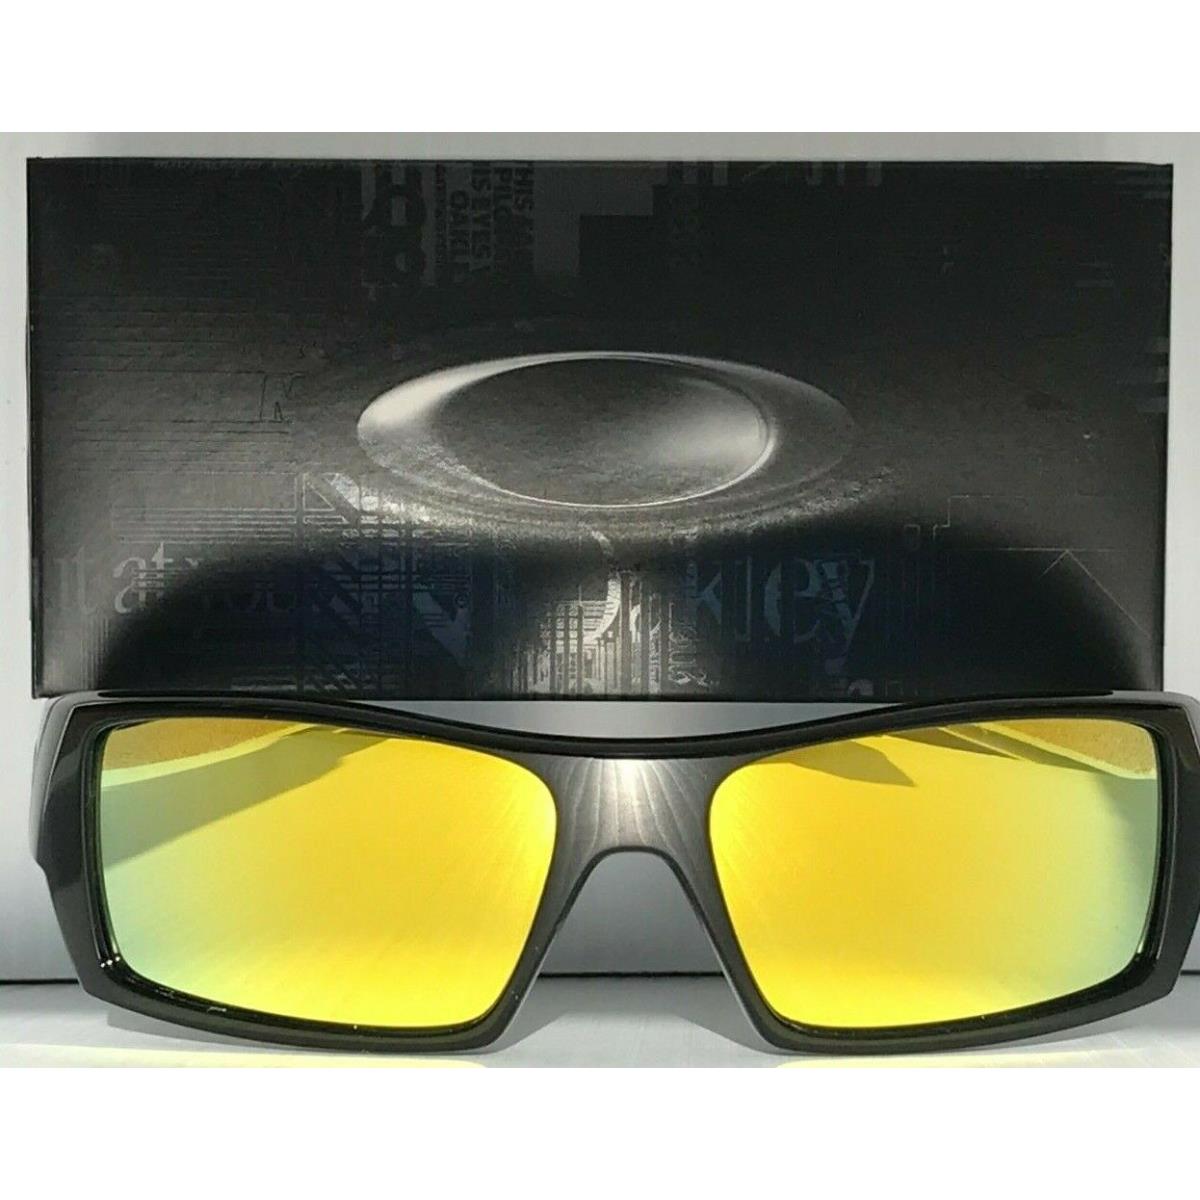 Oakley sunglasses Gascan - Black Frame, Gold Lens 3